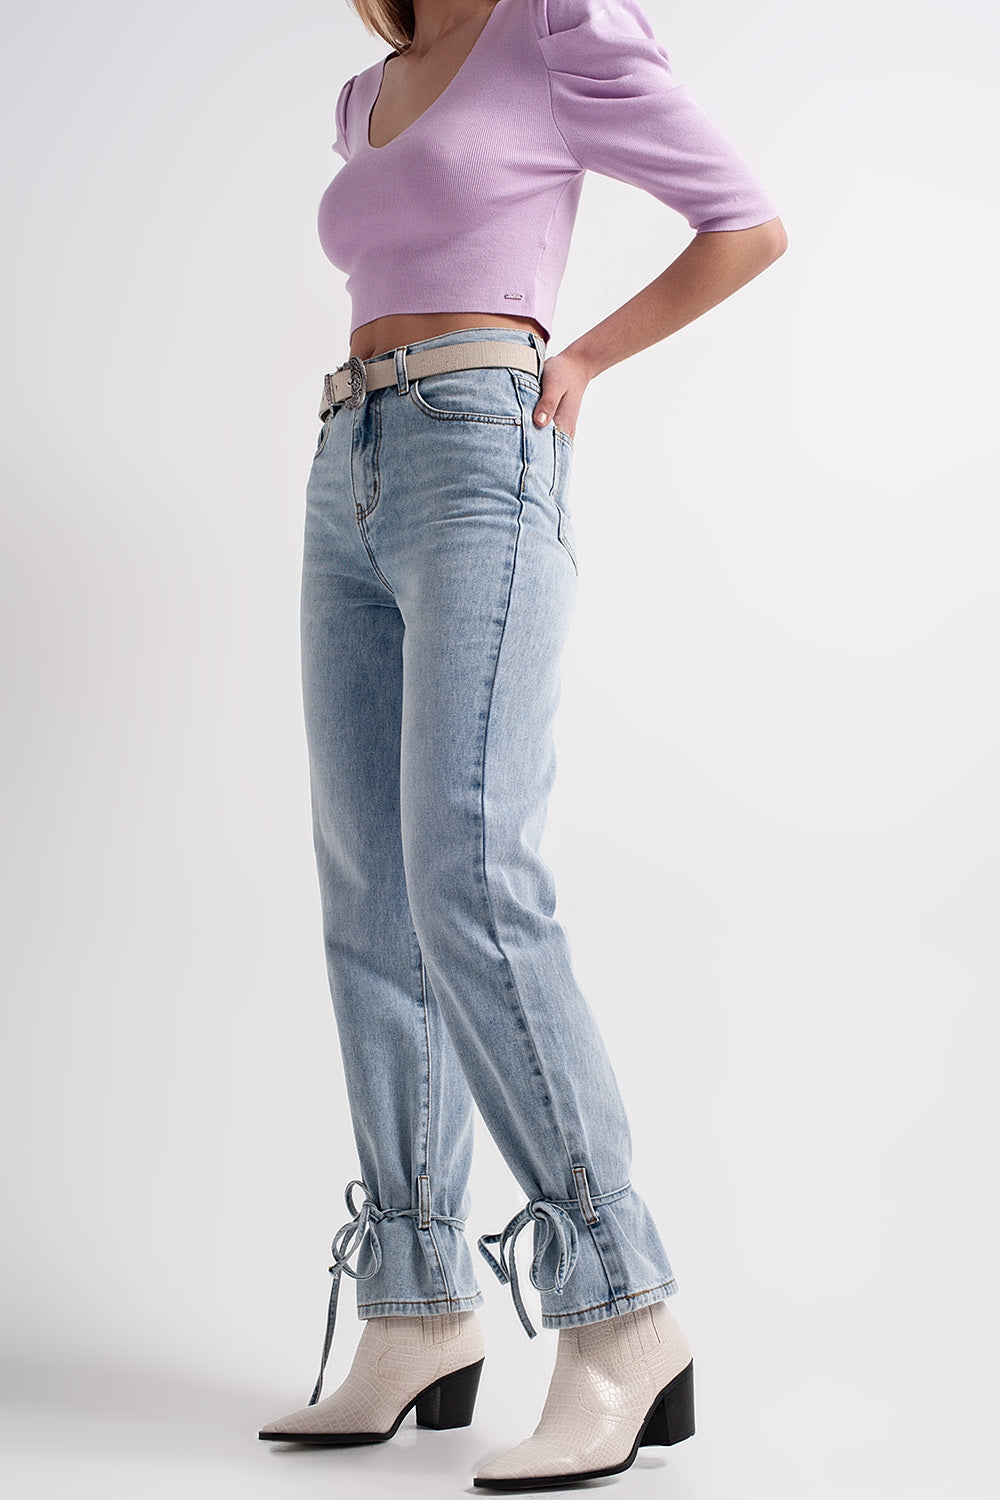 jeans with drawstring Szua Store